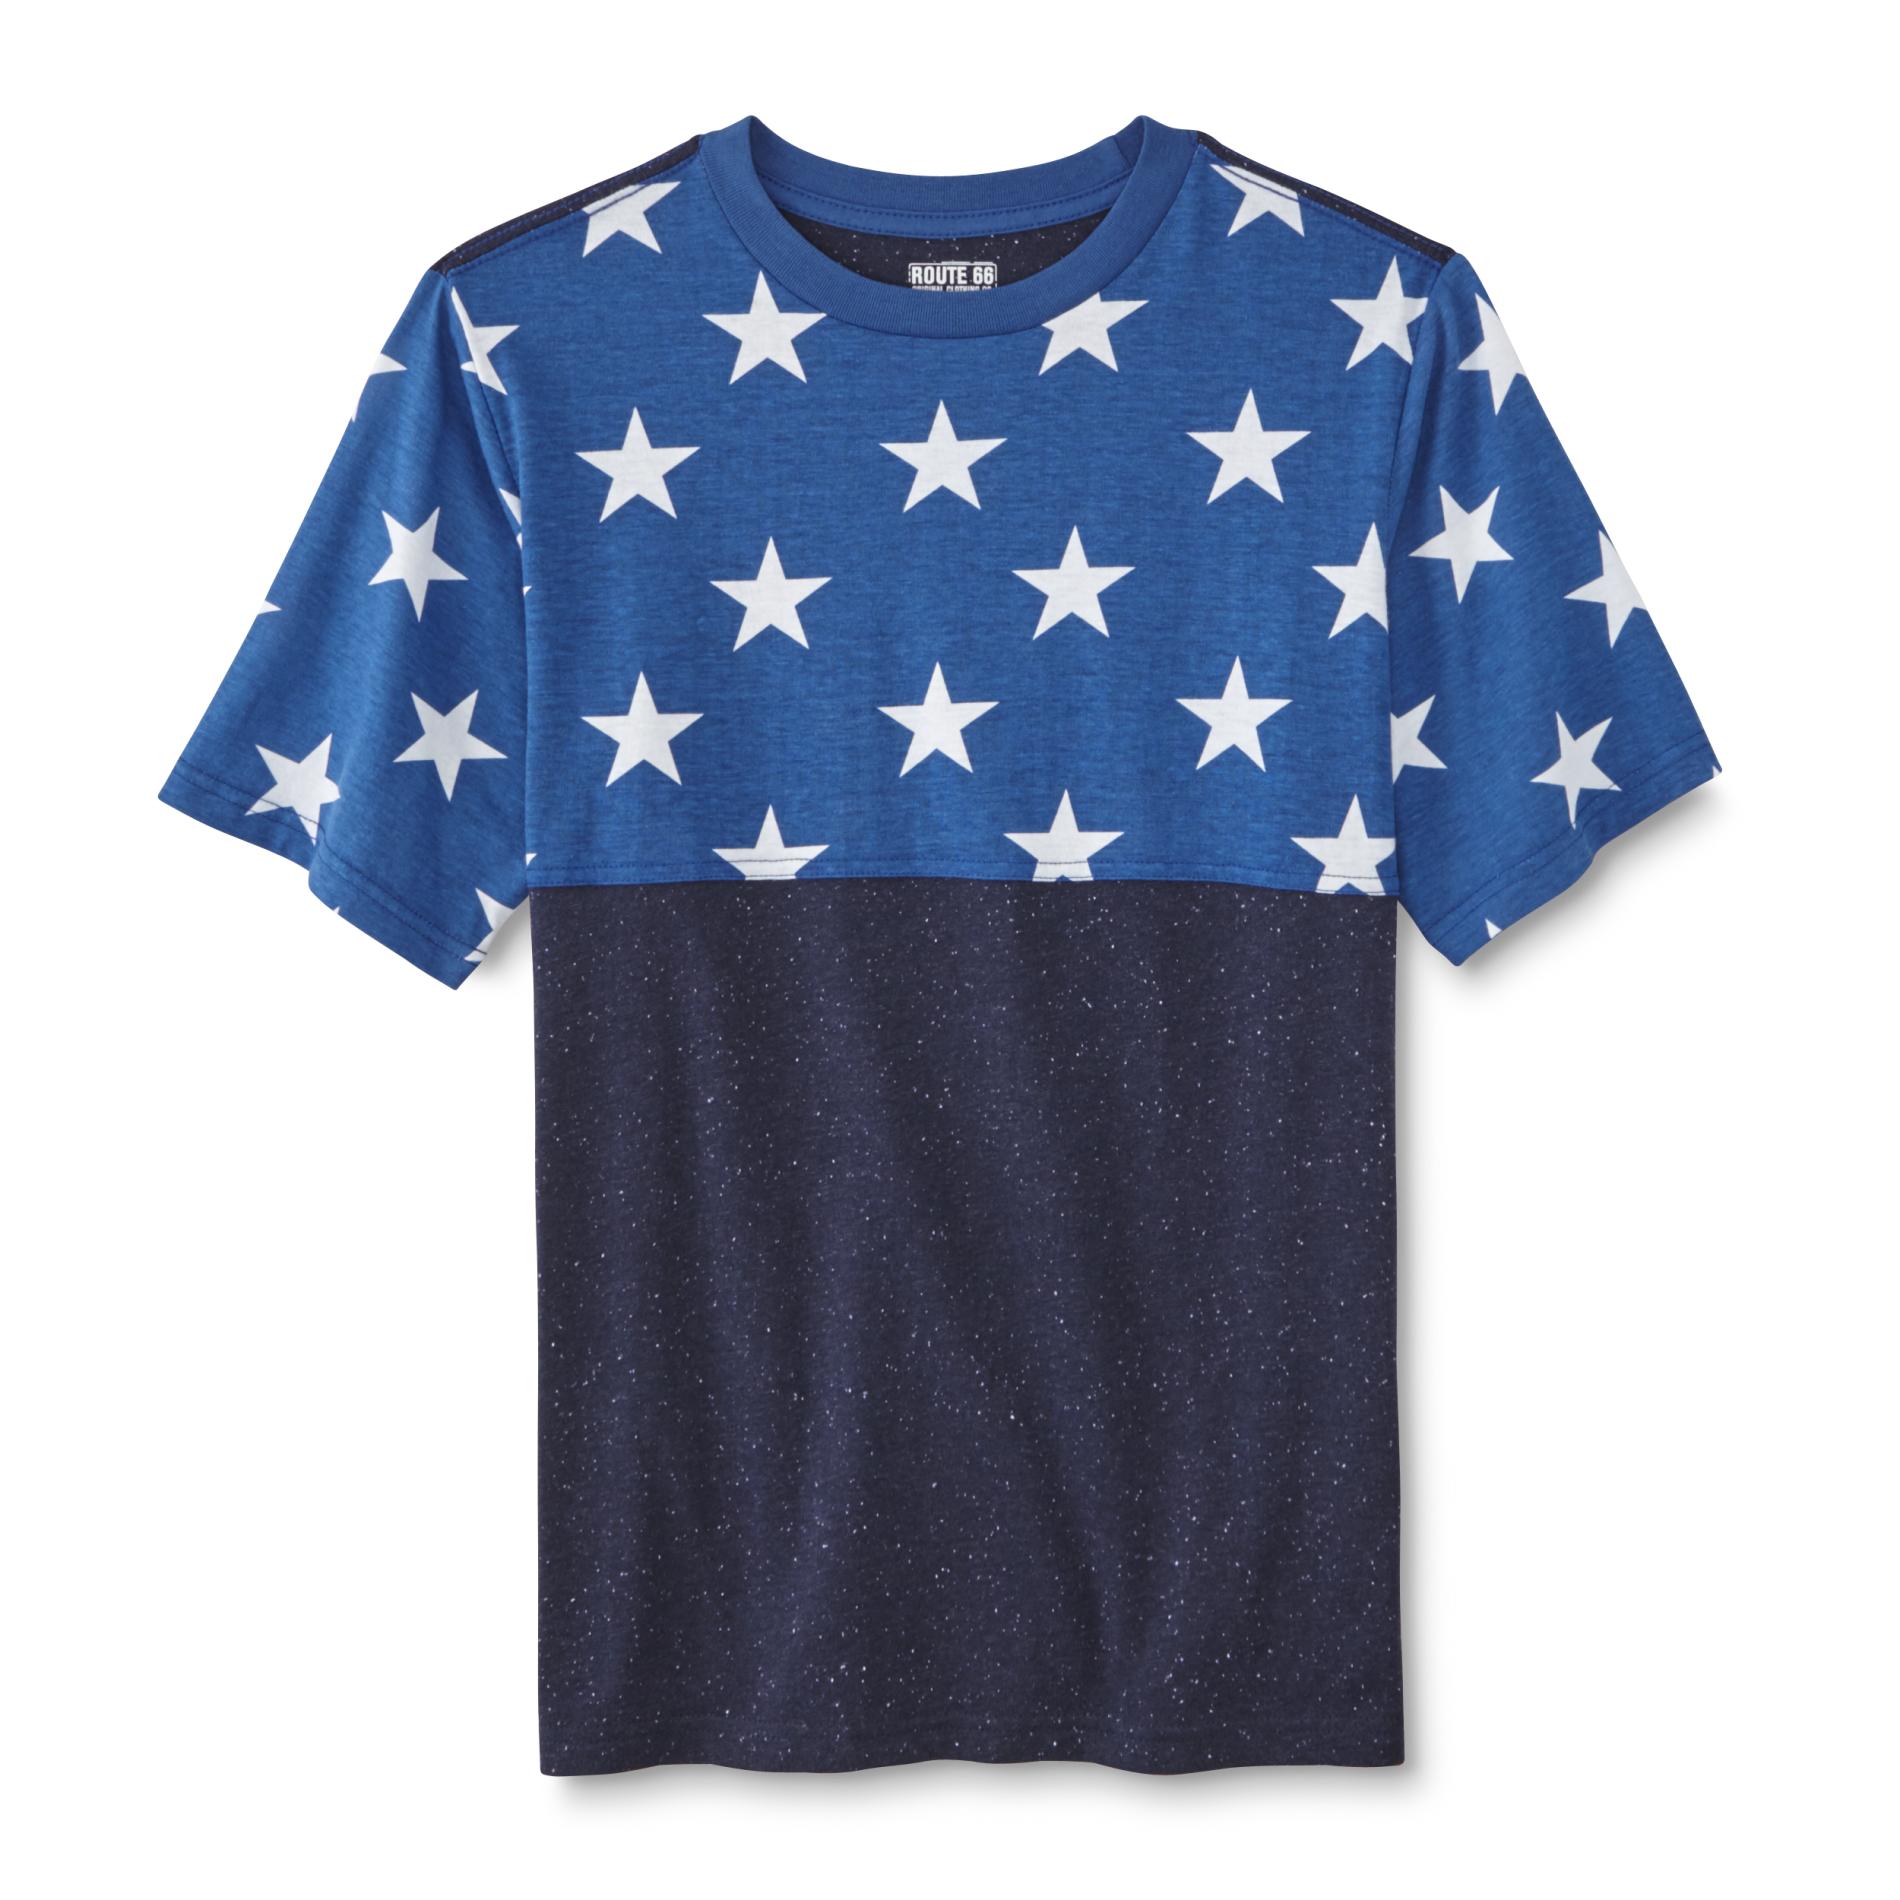 Route 66 Boy's T-Shirt - Stars